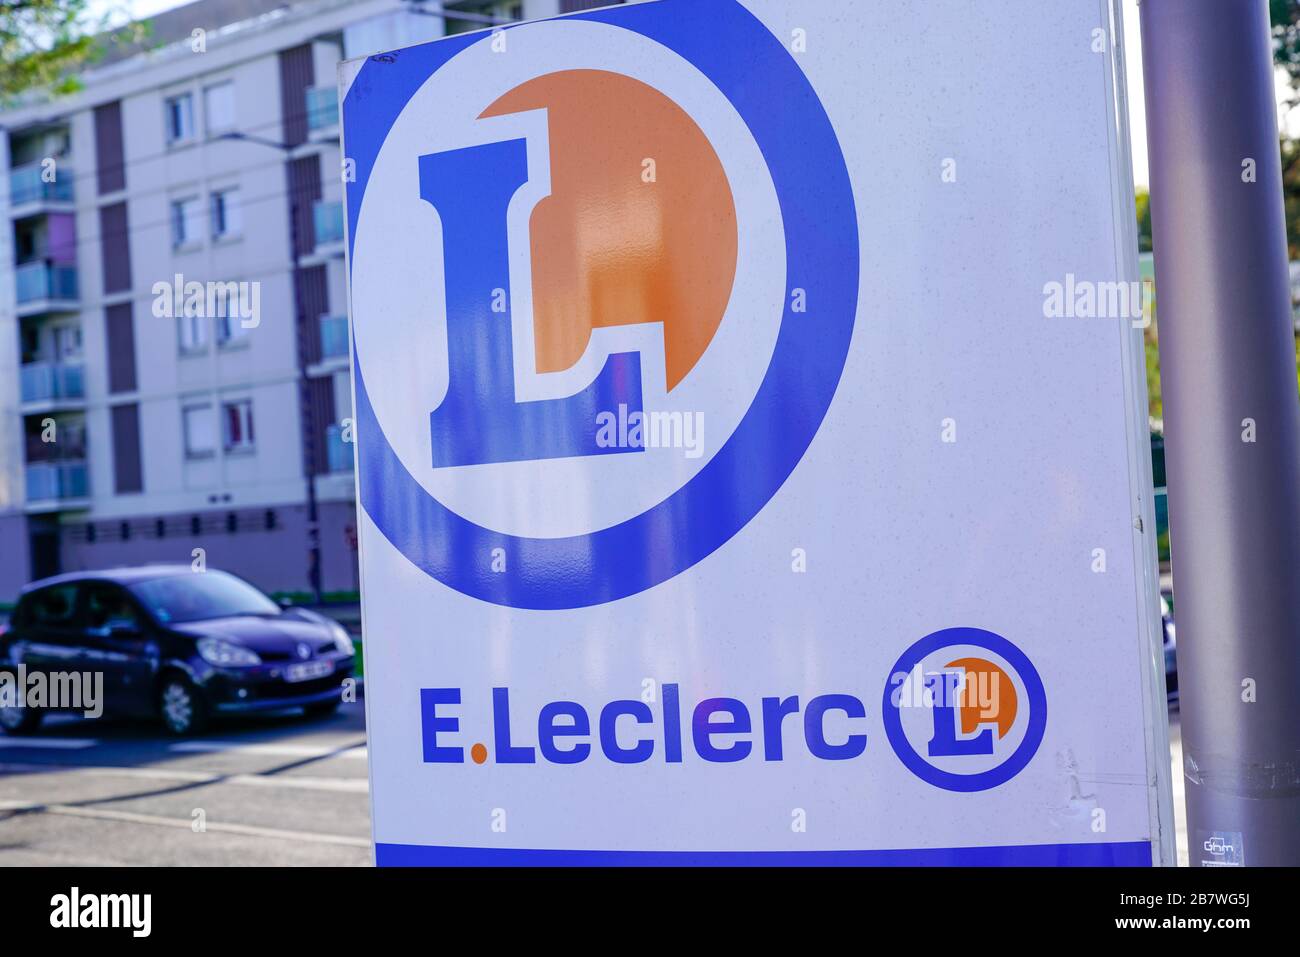 Bordeaux , Aquitaine / France - 11 13 2019 : E.Leclerc sign French hypermarket leclerc shop store with logo Stock Photo